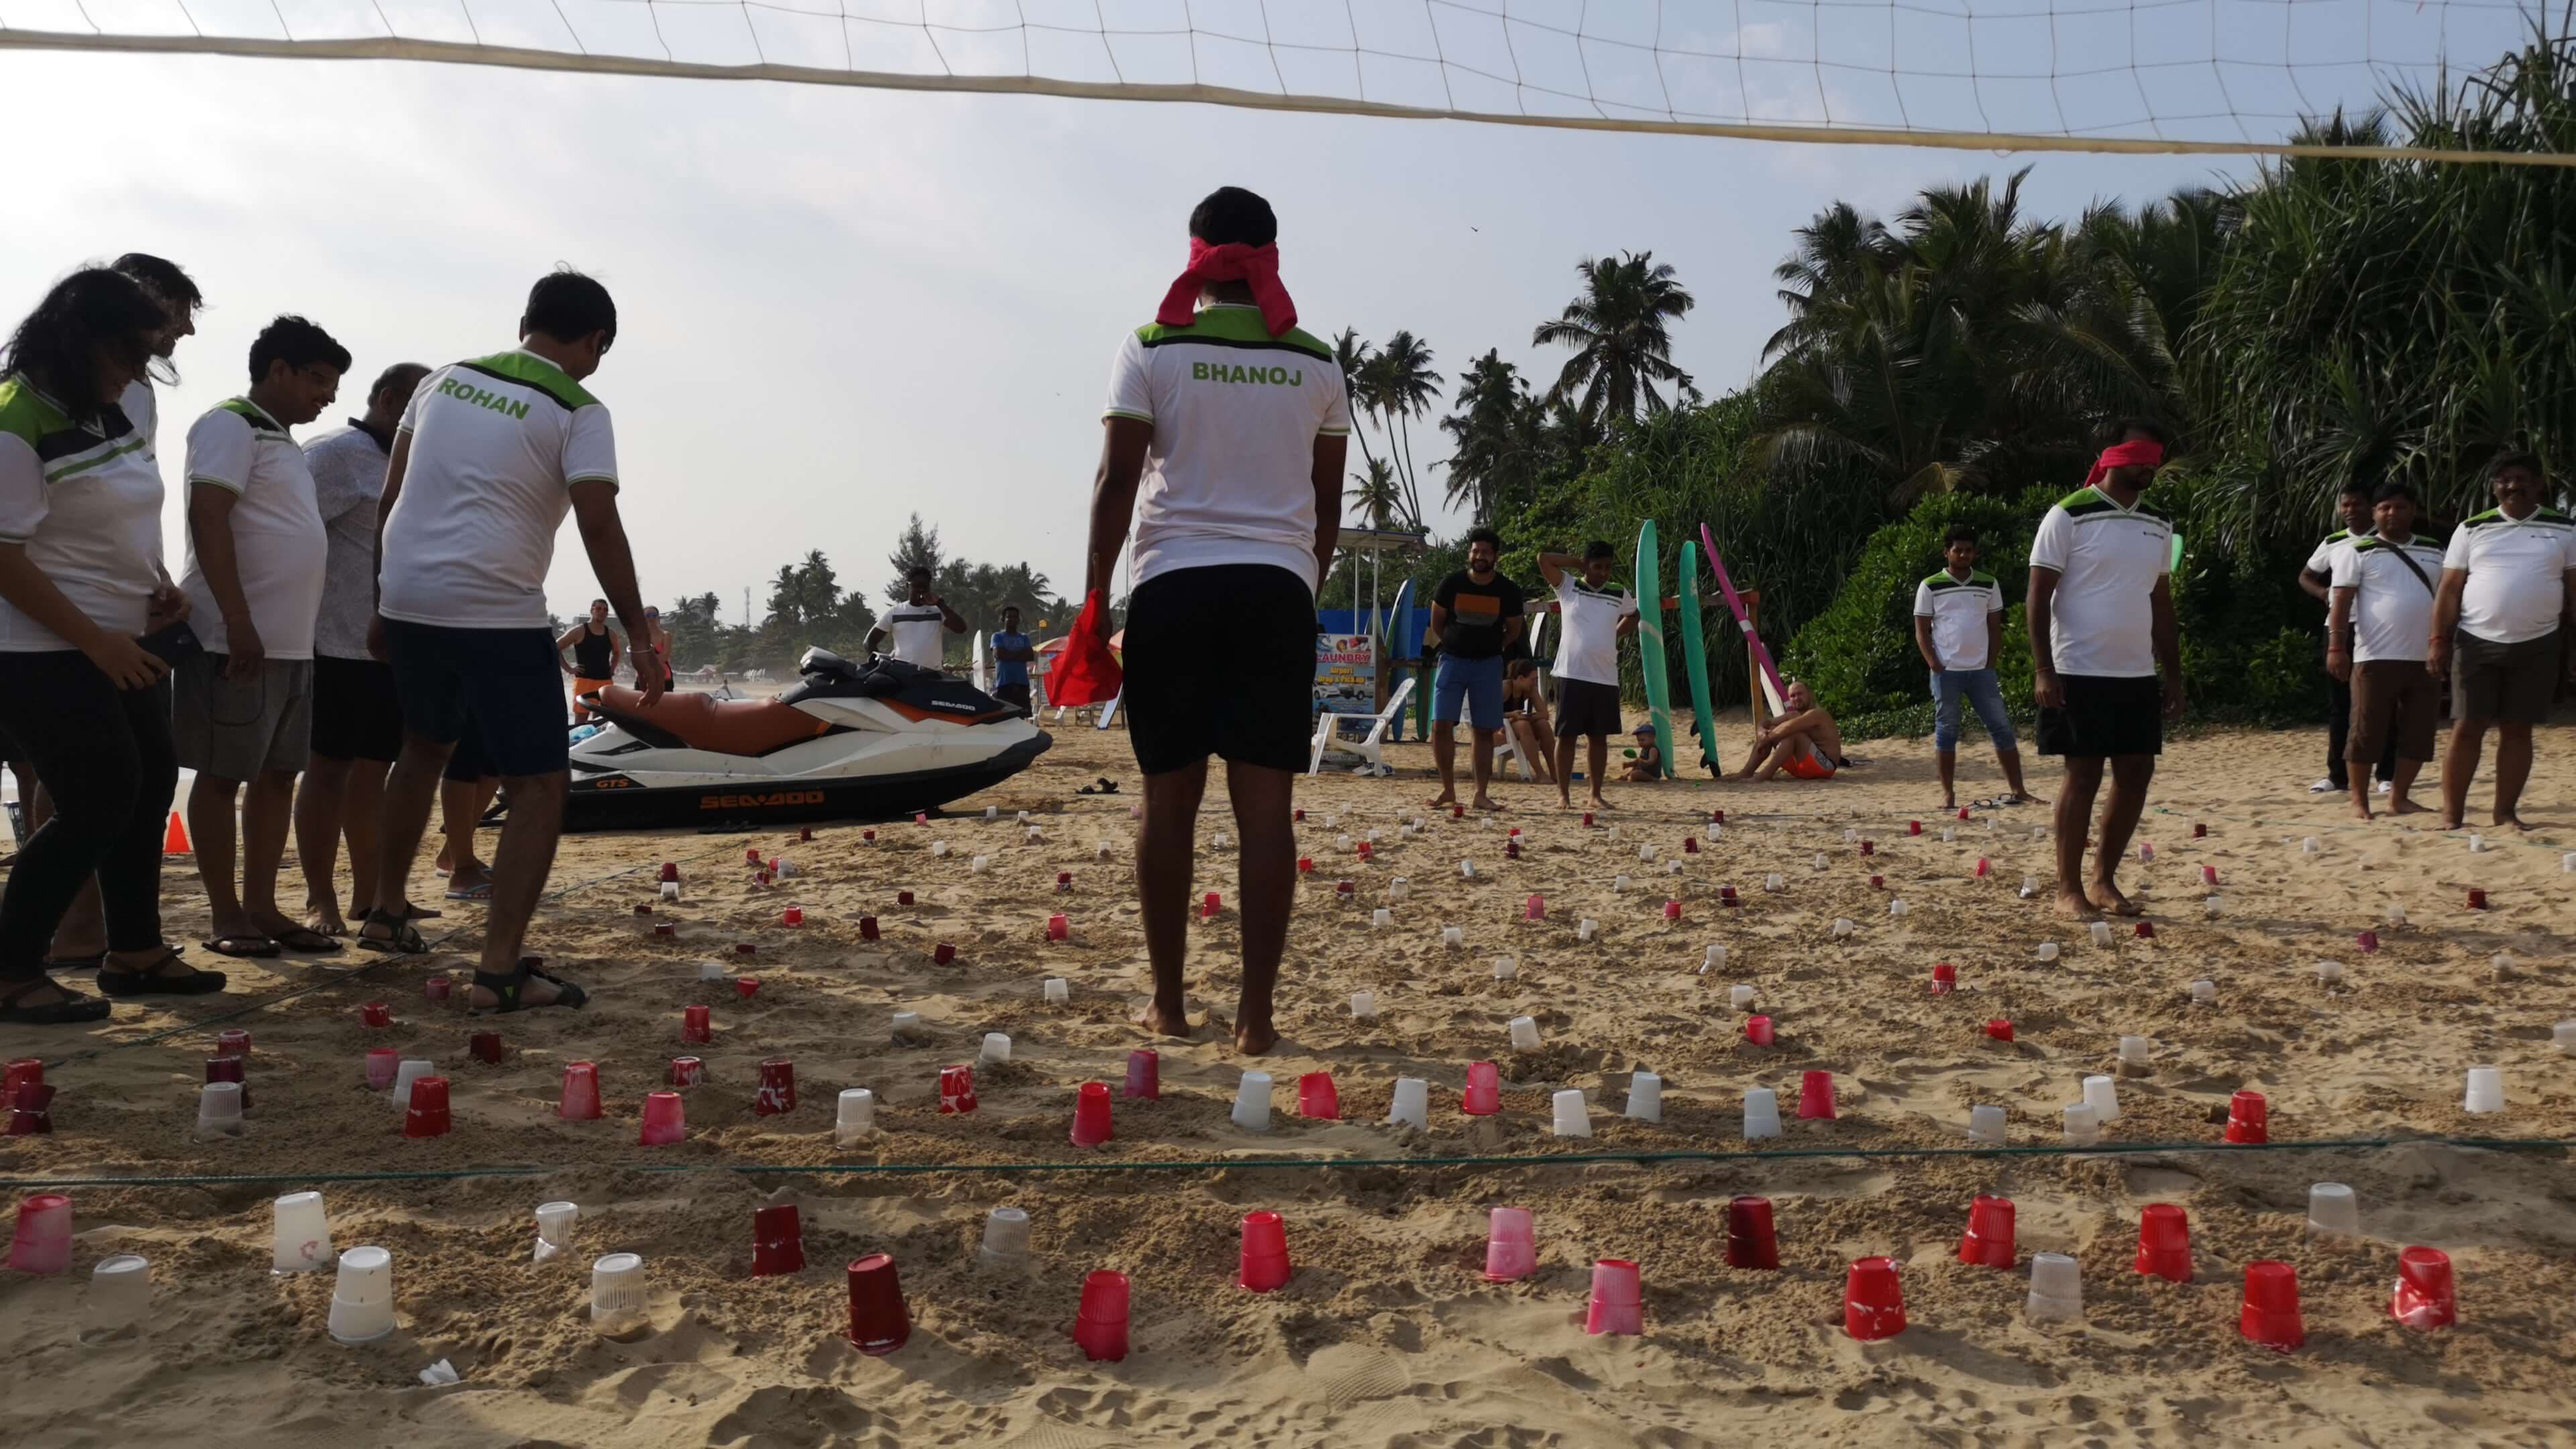 A team building event organized at the beach, Sri Lanka.